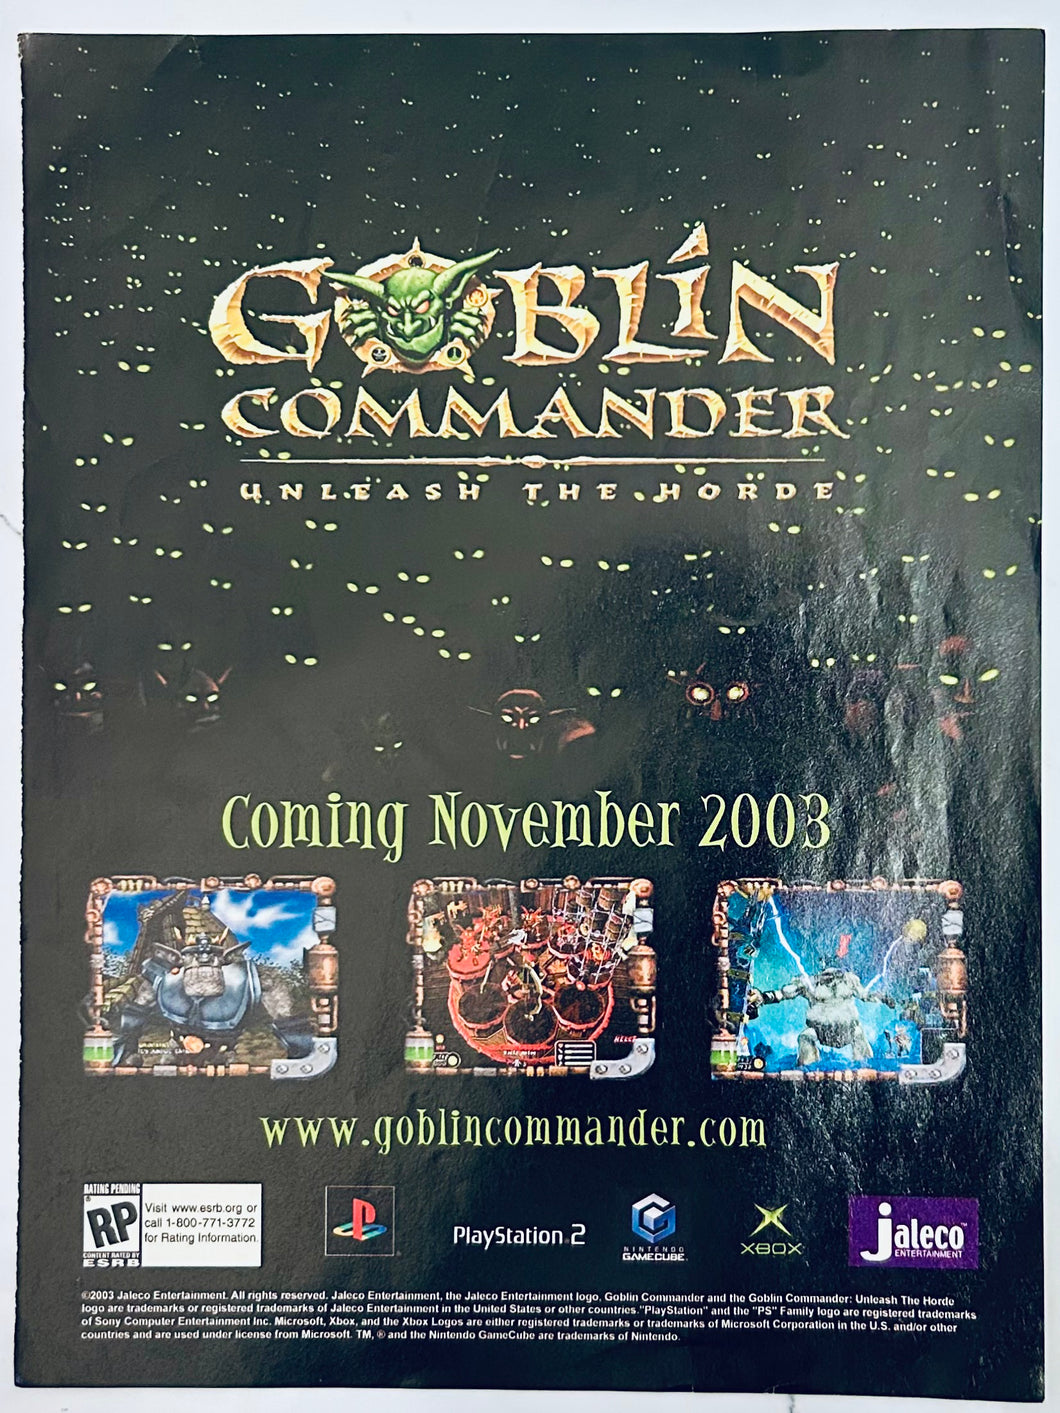 Goblin Commander: Unleash the Horde - PS2 NGC Xbox - Original Vintage Advertisement - Print Ads - Laminated A4 Posteri